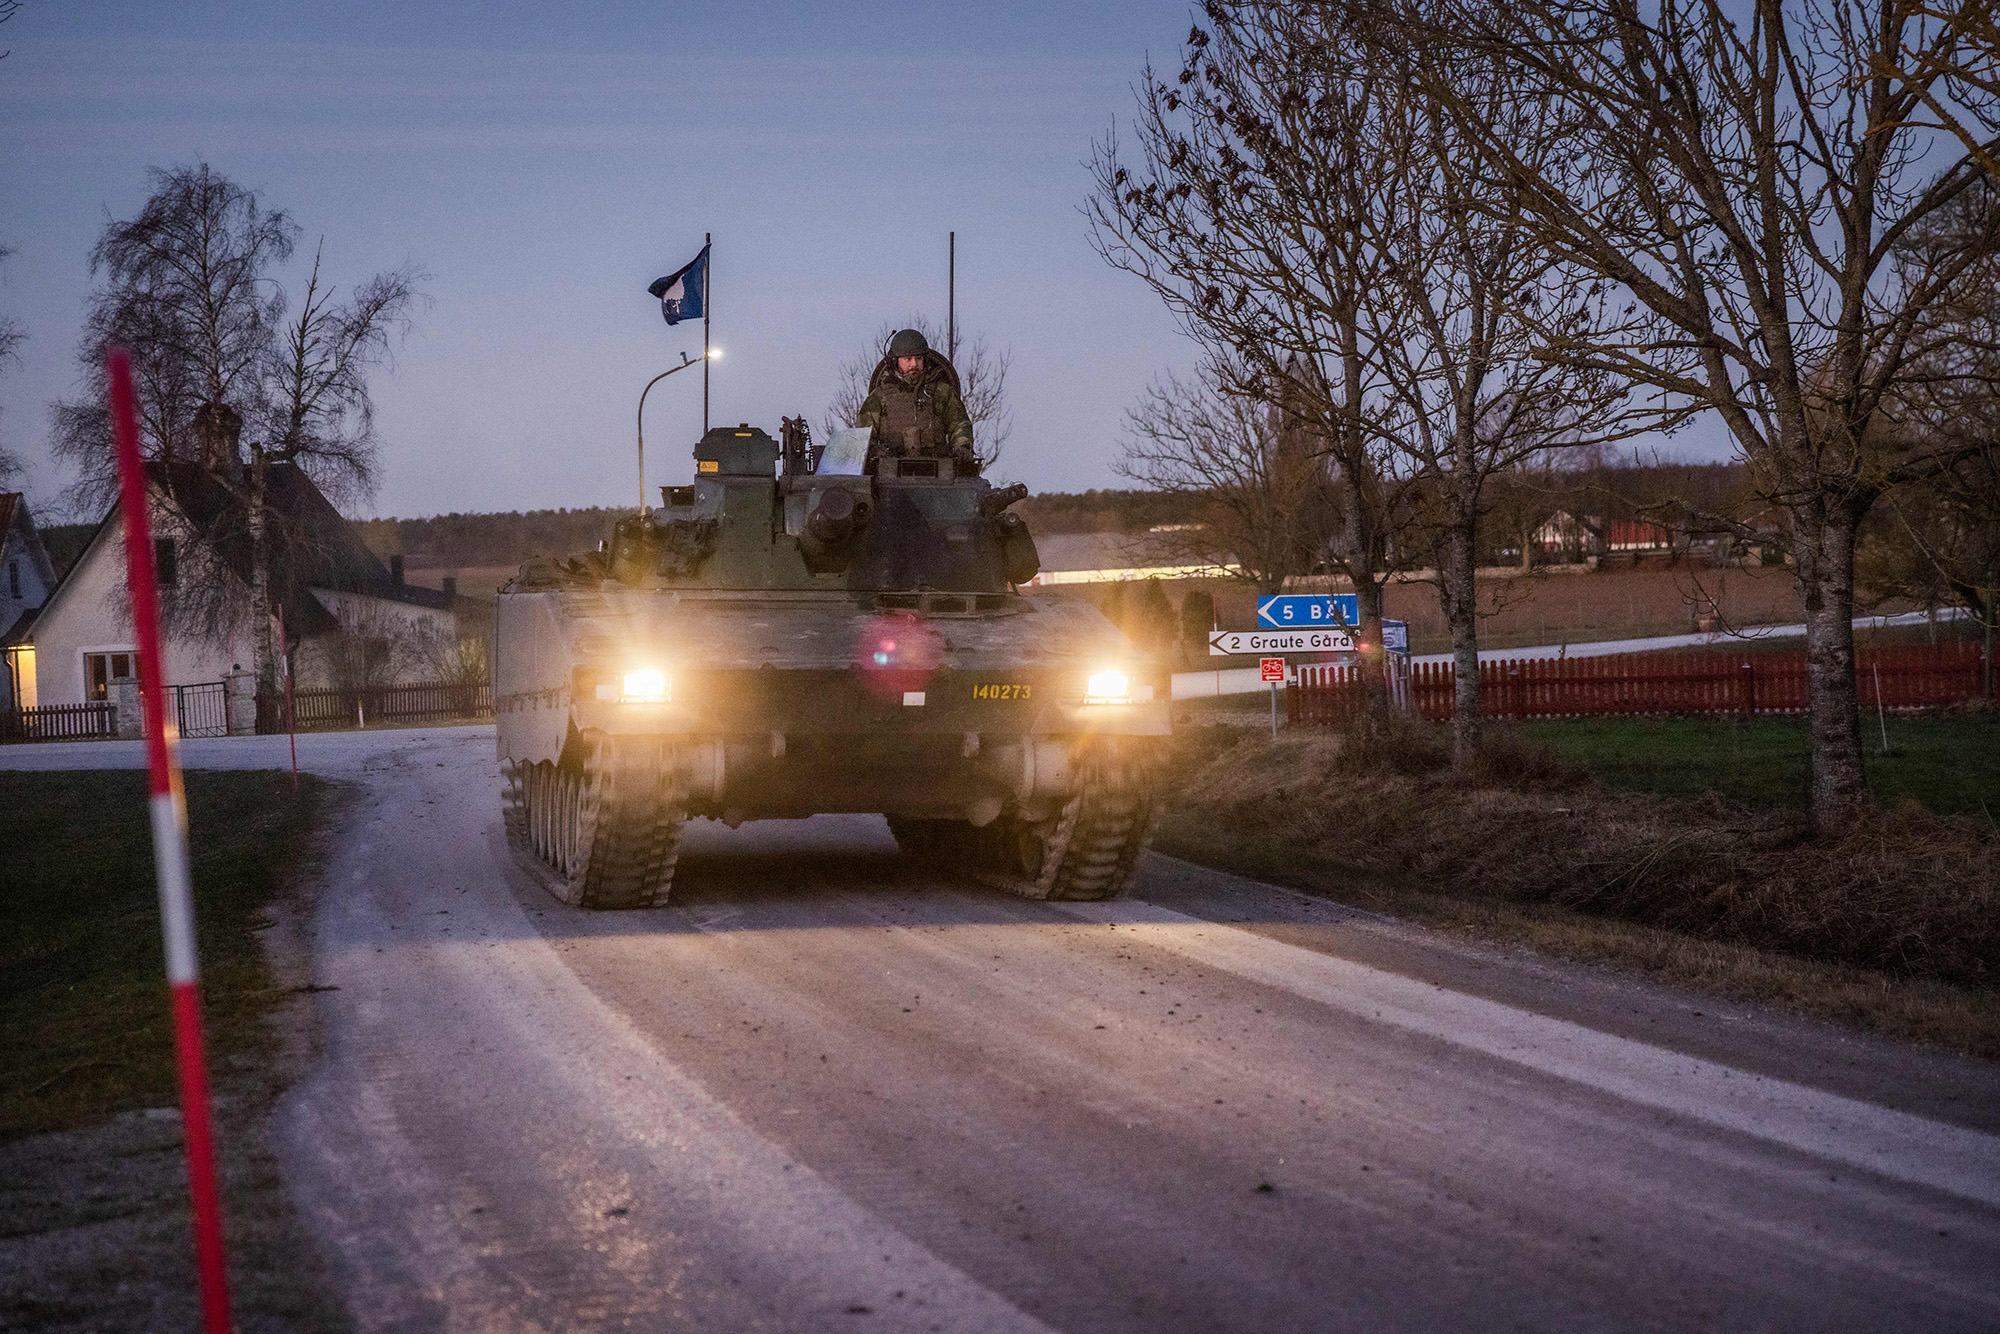 Gotland's Regiment patrols in tanks on the roads in northern Gotland, Sweden on Jan. 16.&nbsp;